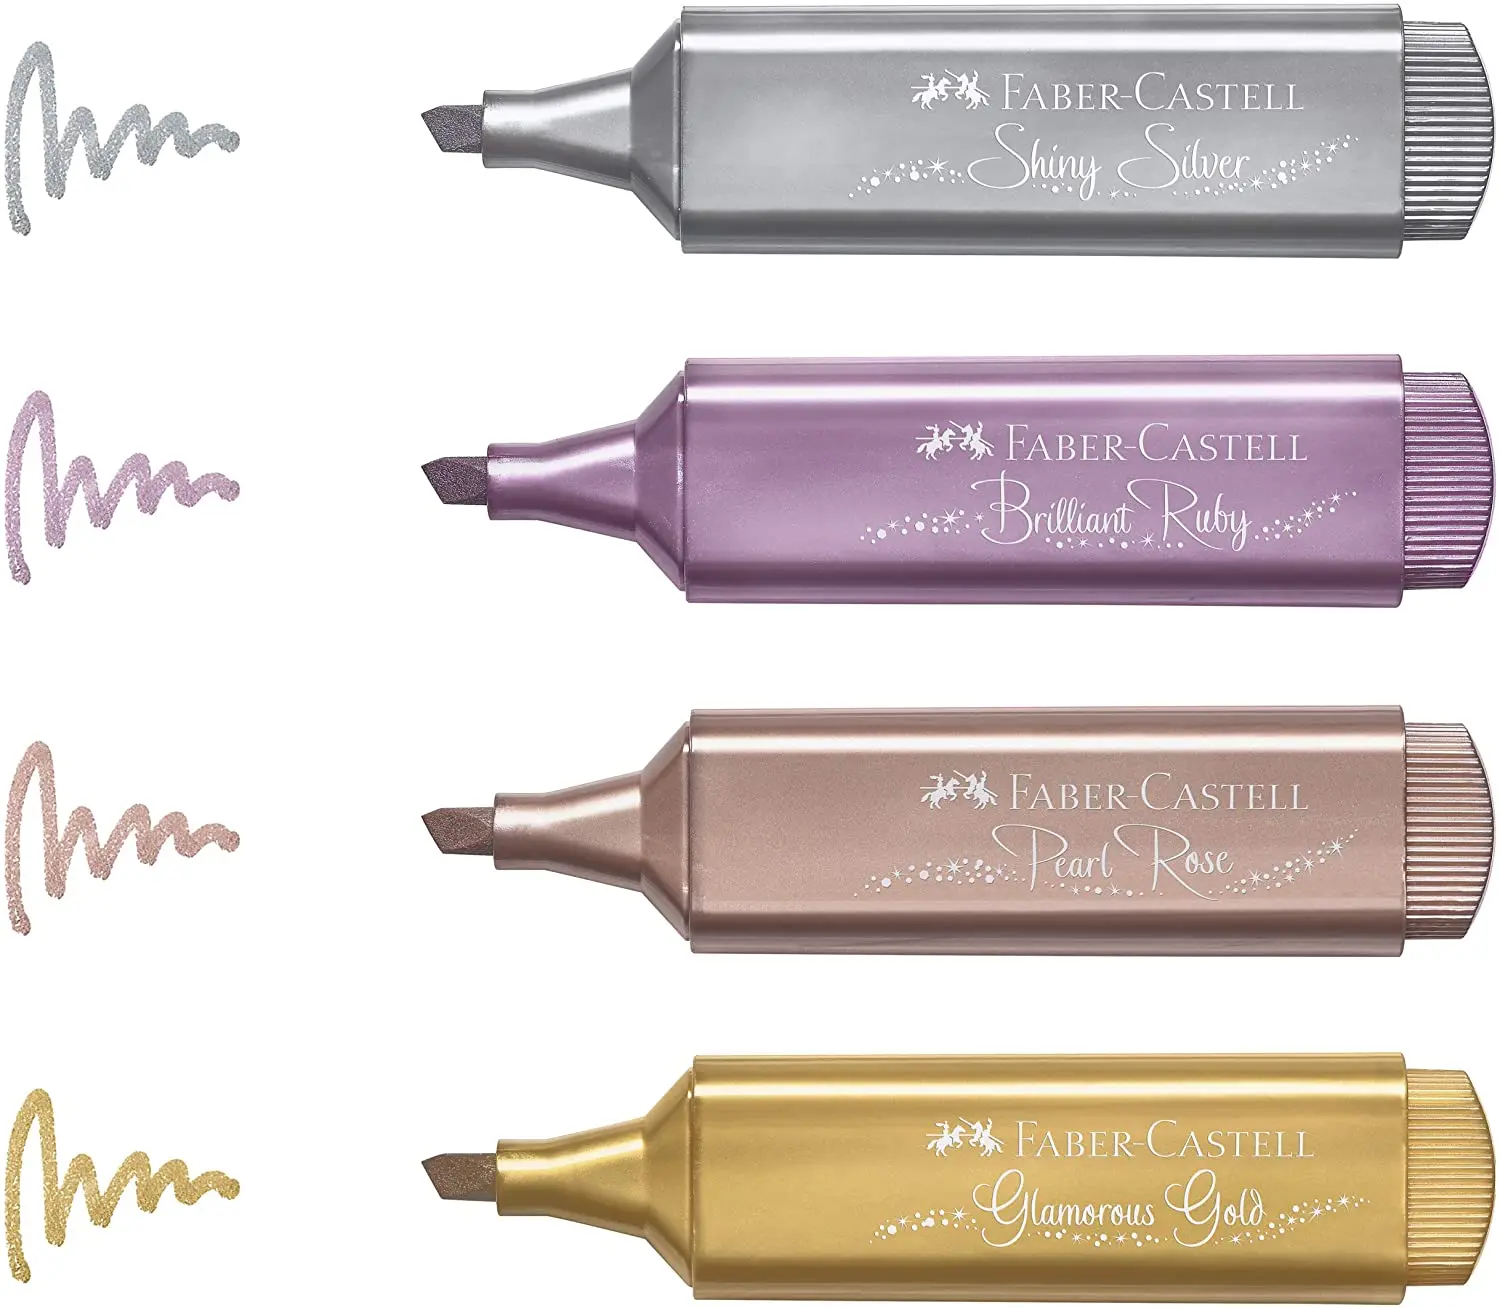 

Faber Castell Metallic Glossy Textliner Original Highlighter 4 Colors Set Marker Writing Drawing Art Pen Home School Office